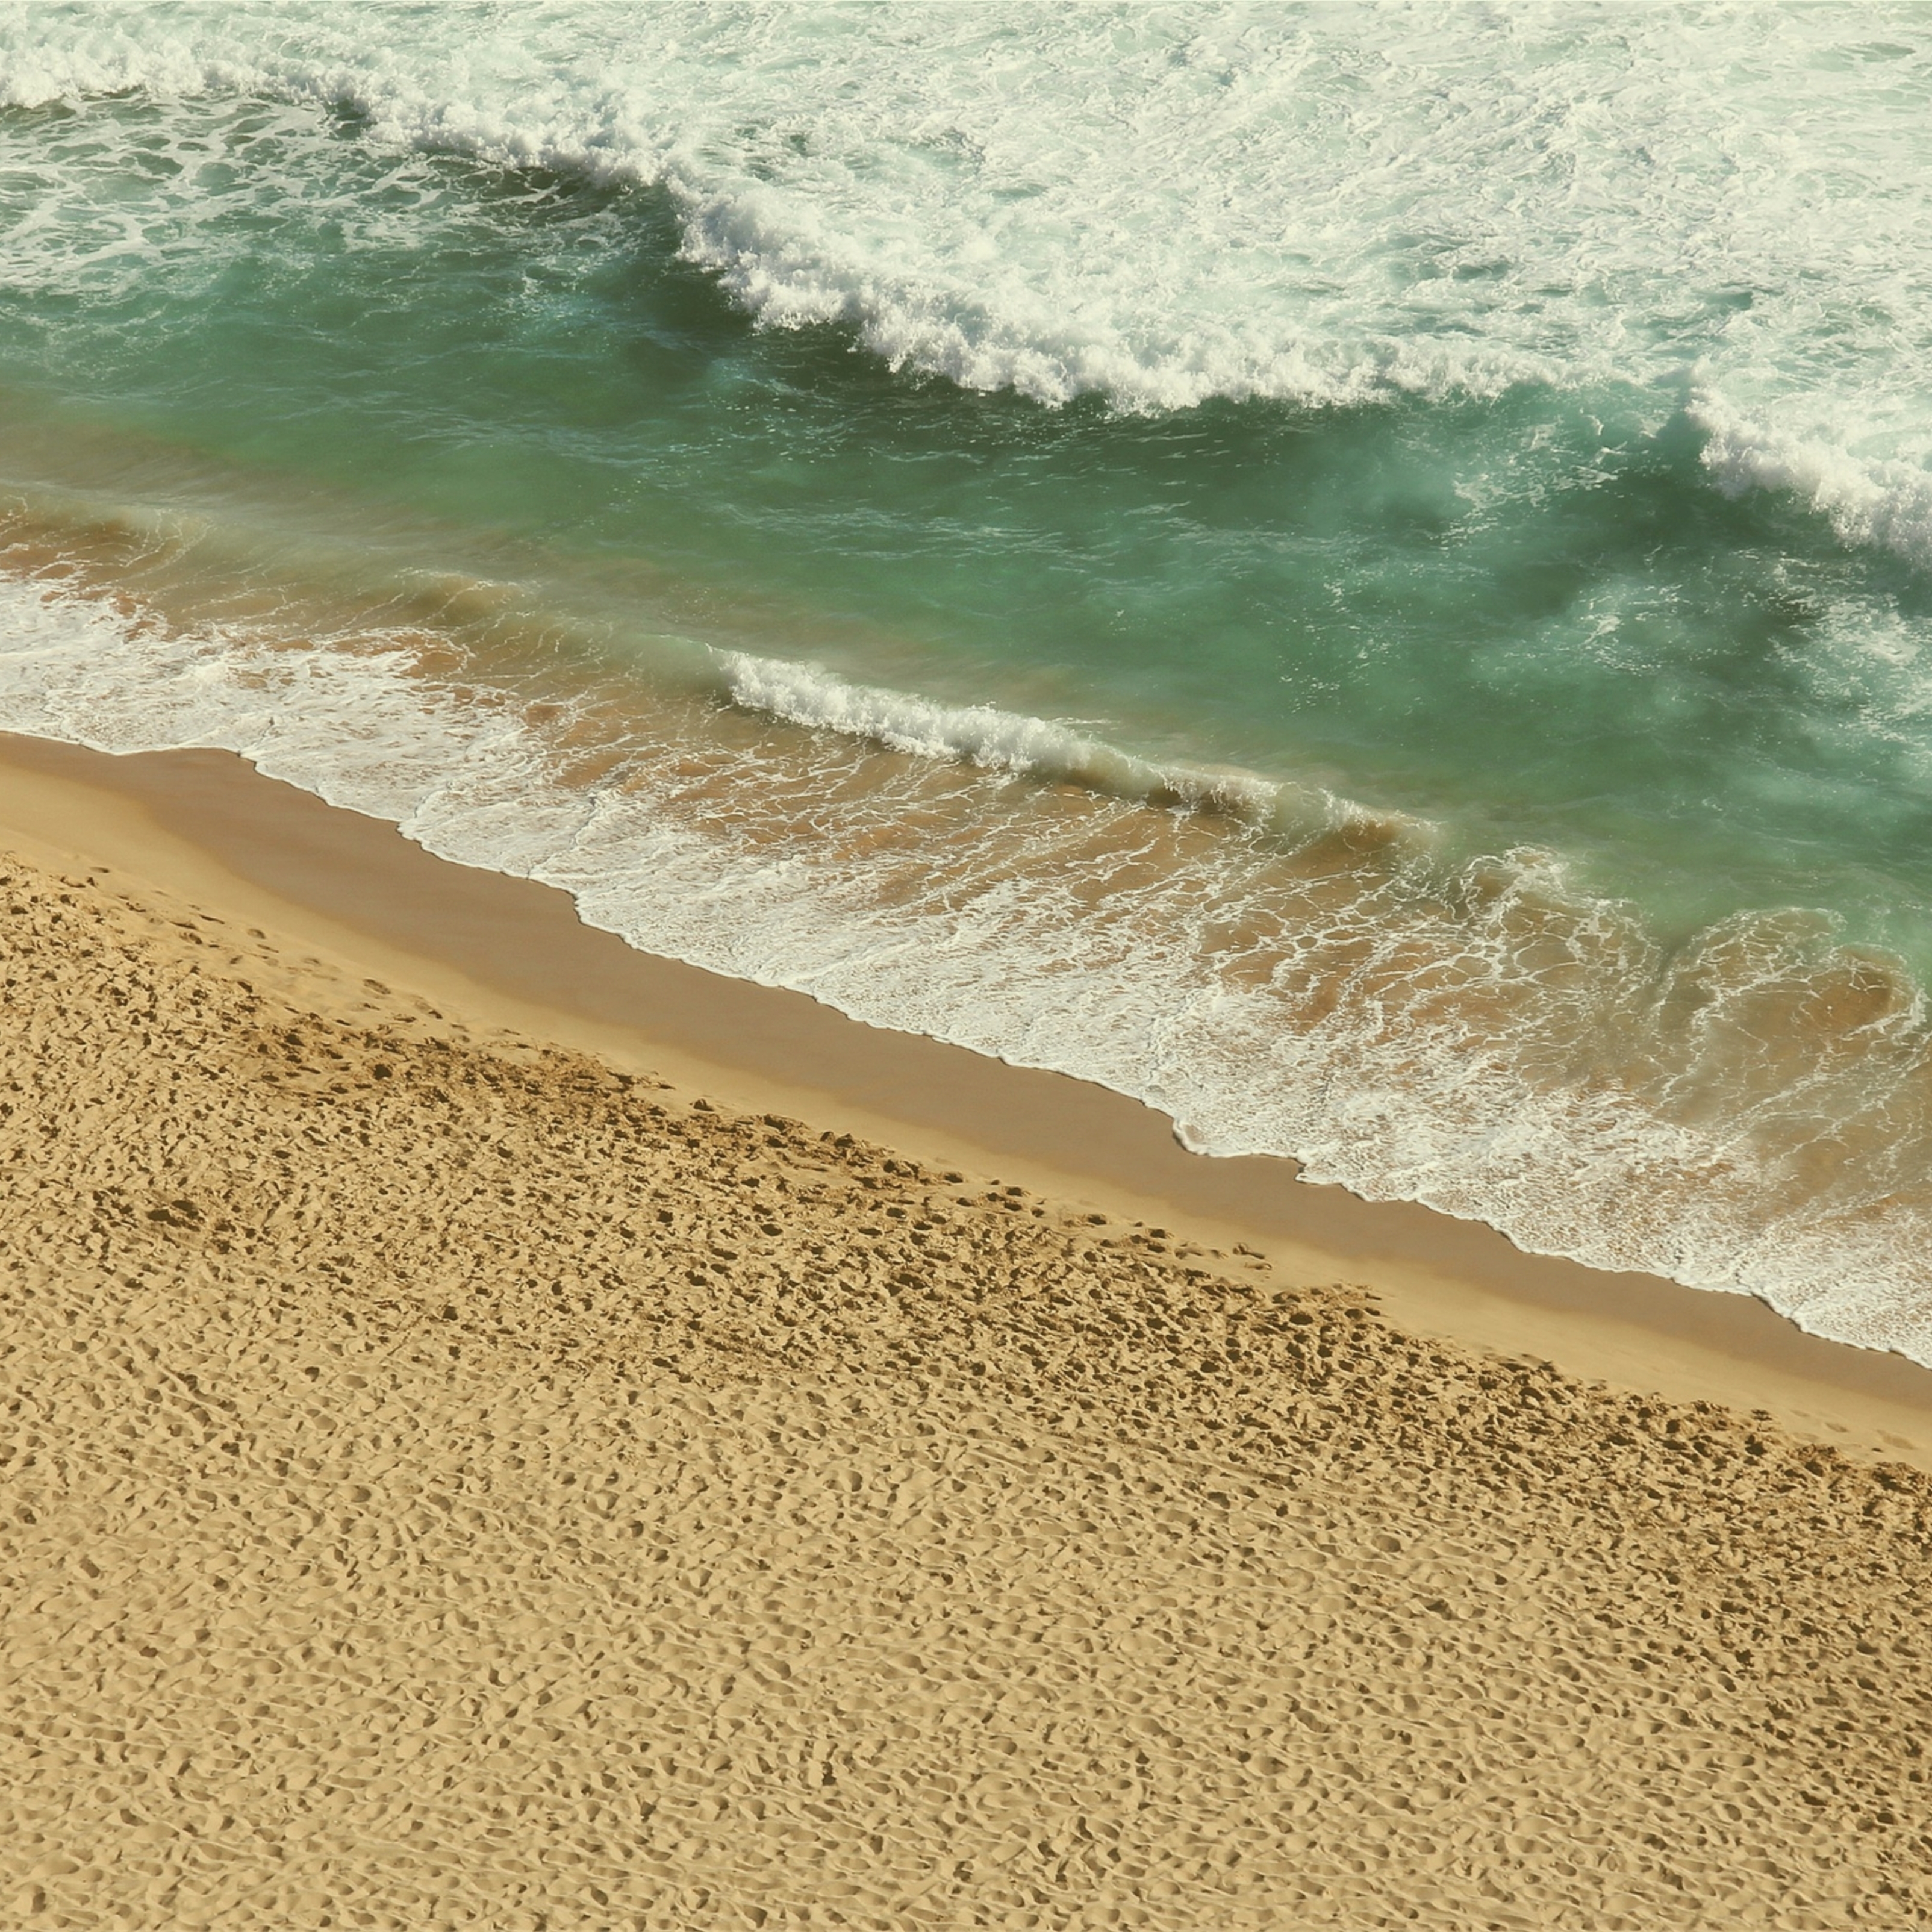 iPad Wallpapers Beach Shore Ocean Waves Water iPad Wallpaper 3208x3208 px